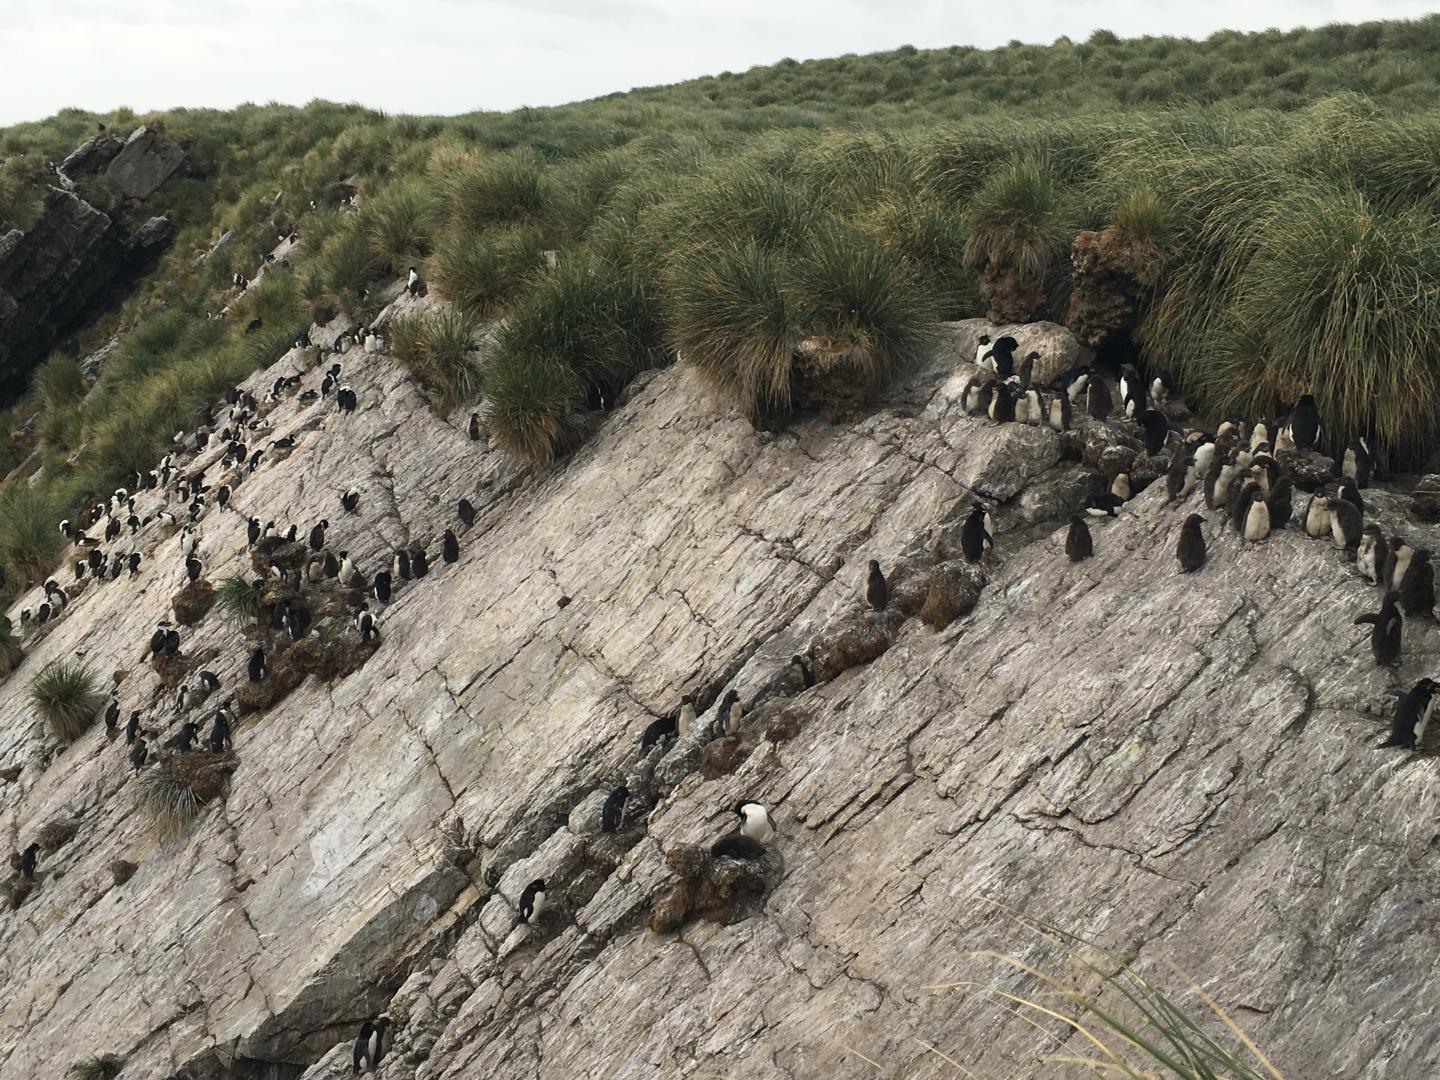 A rookery Southern rockhopper penguins